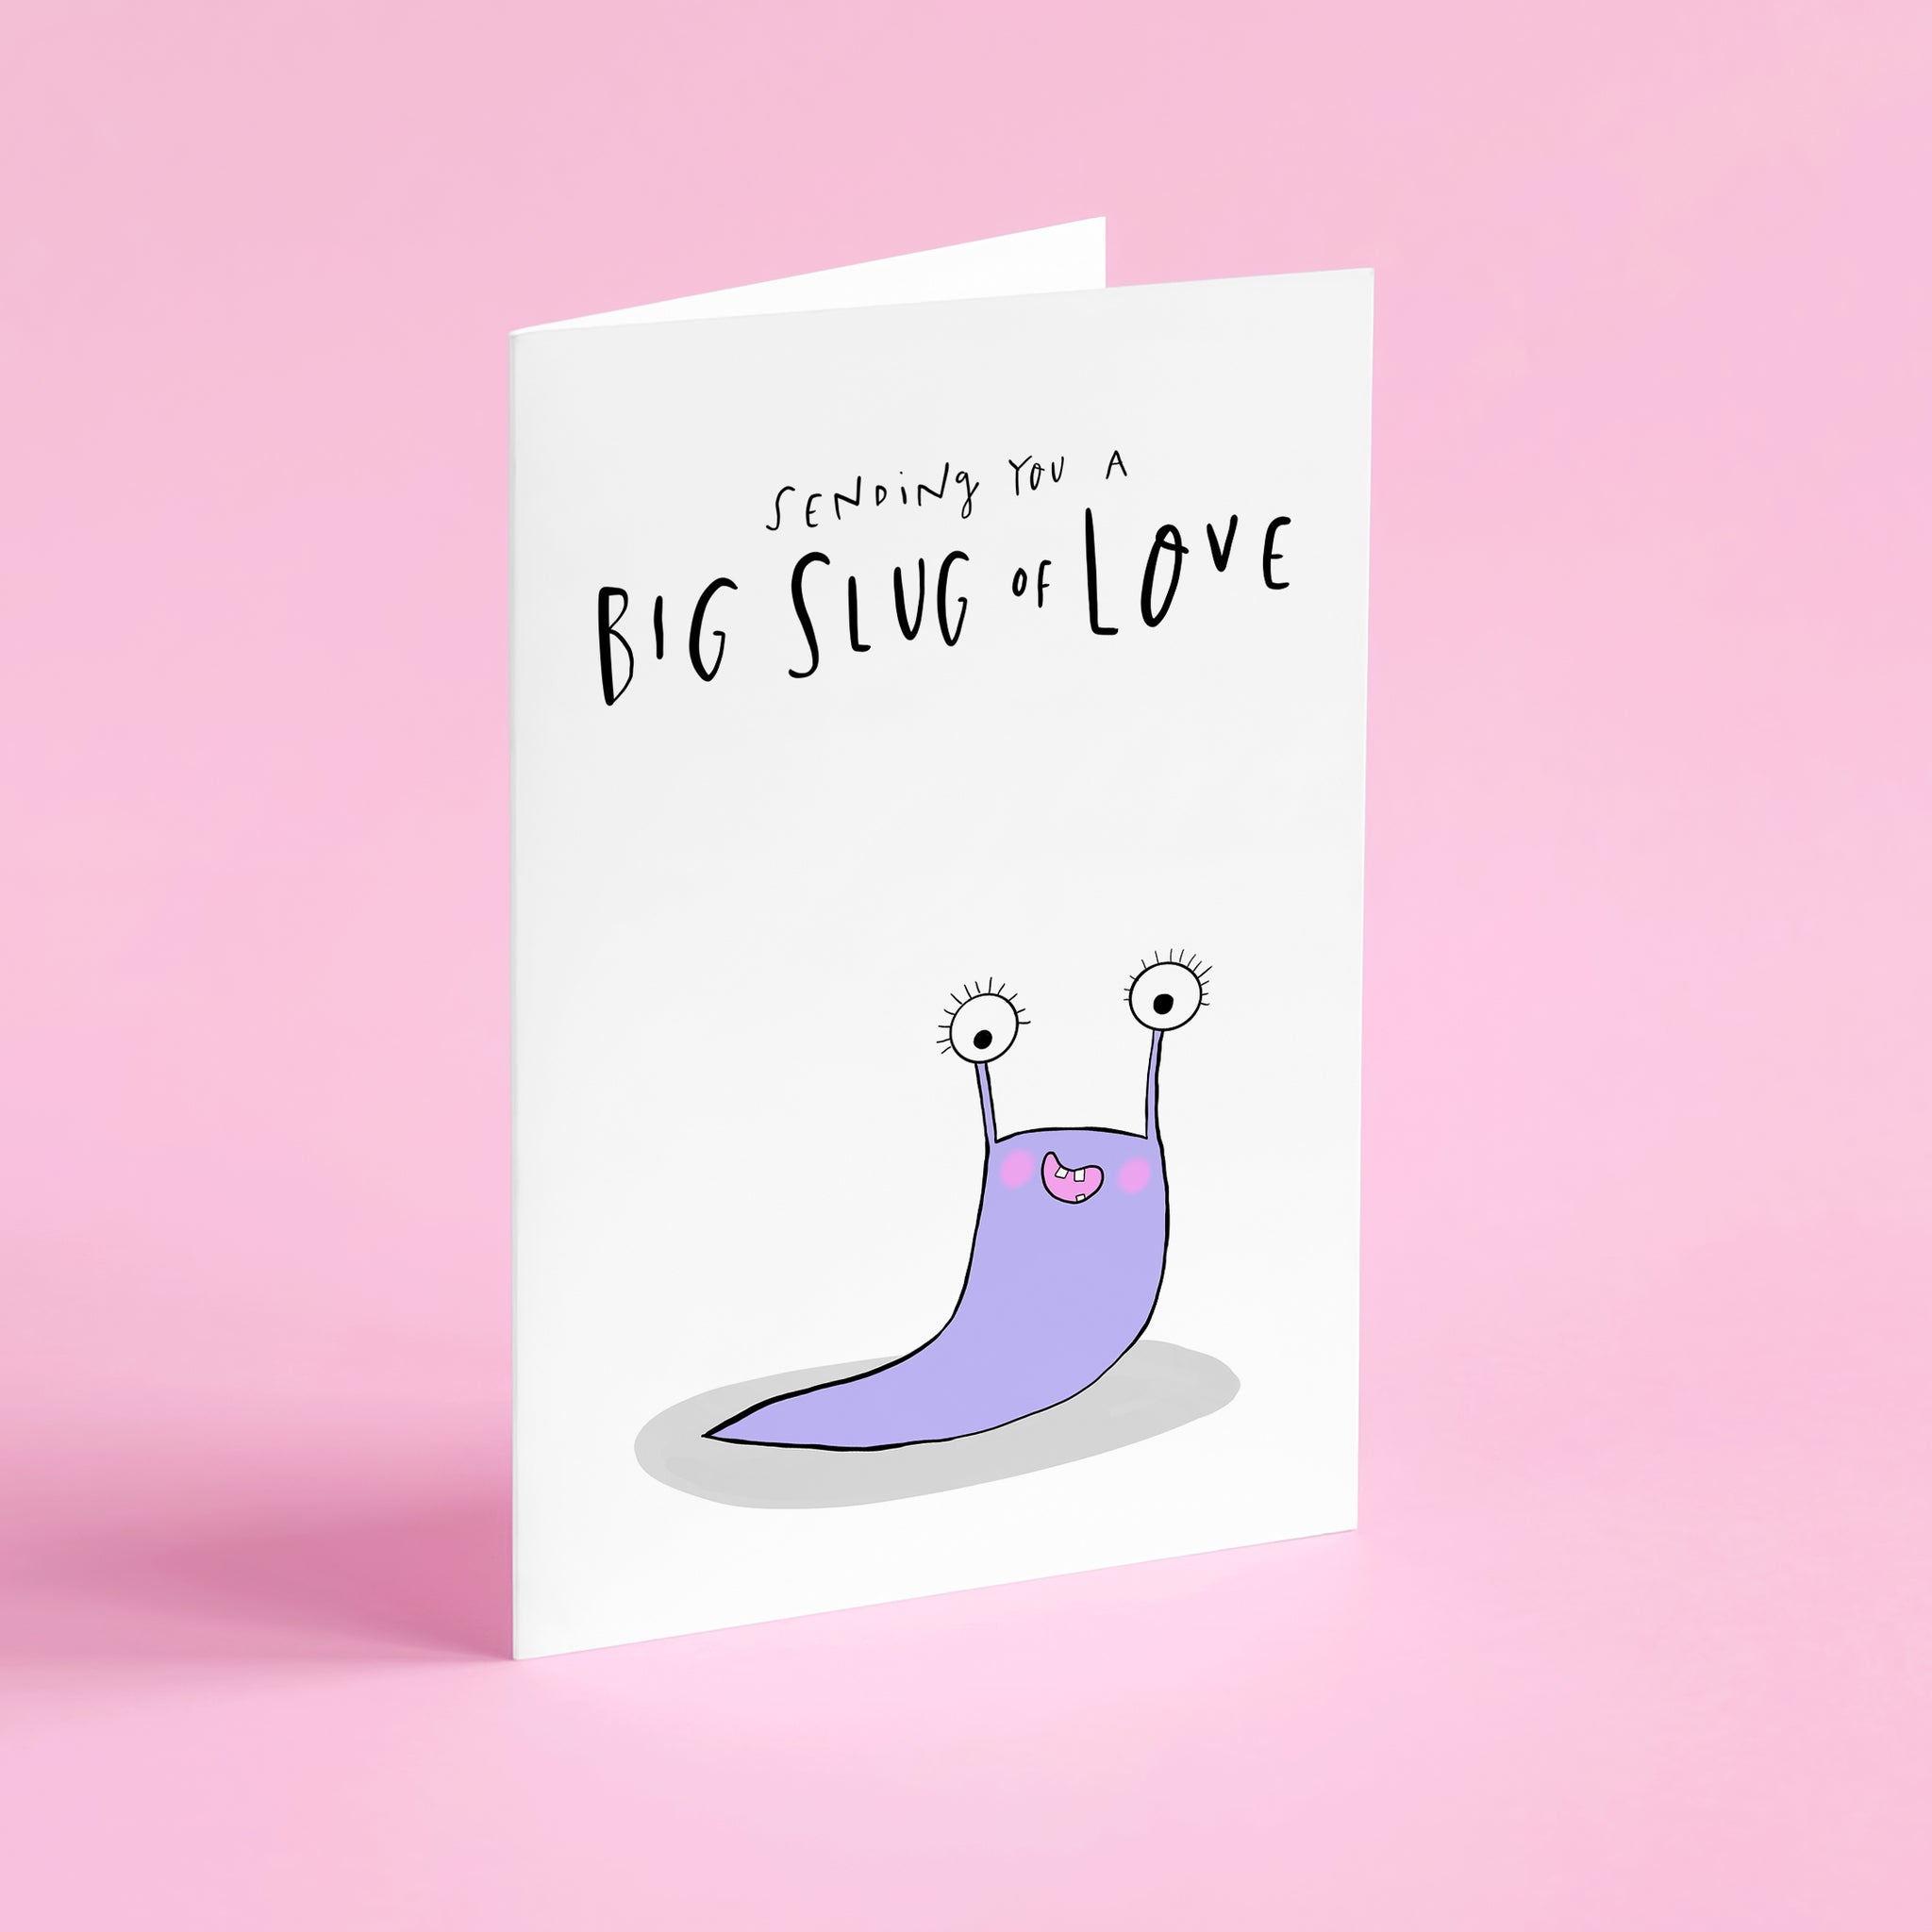 Big slug of Love card